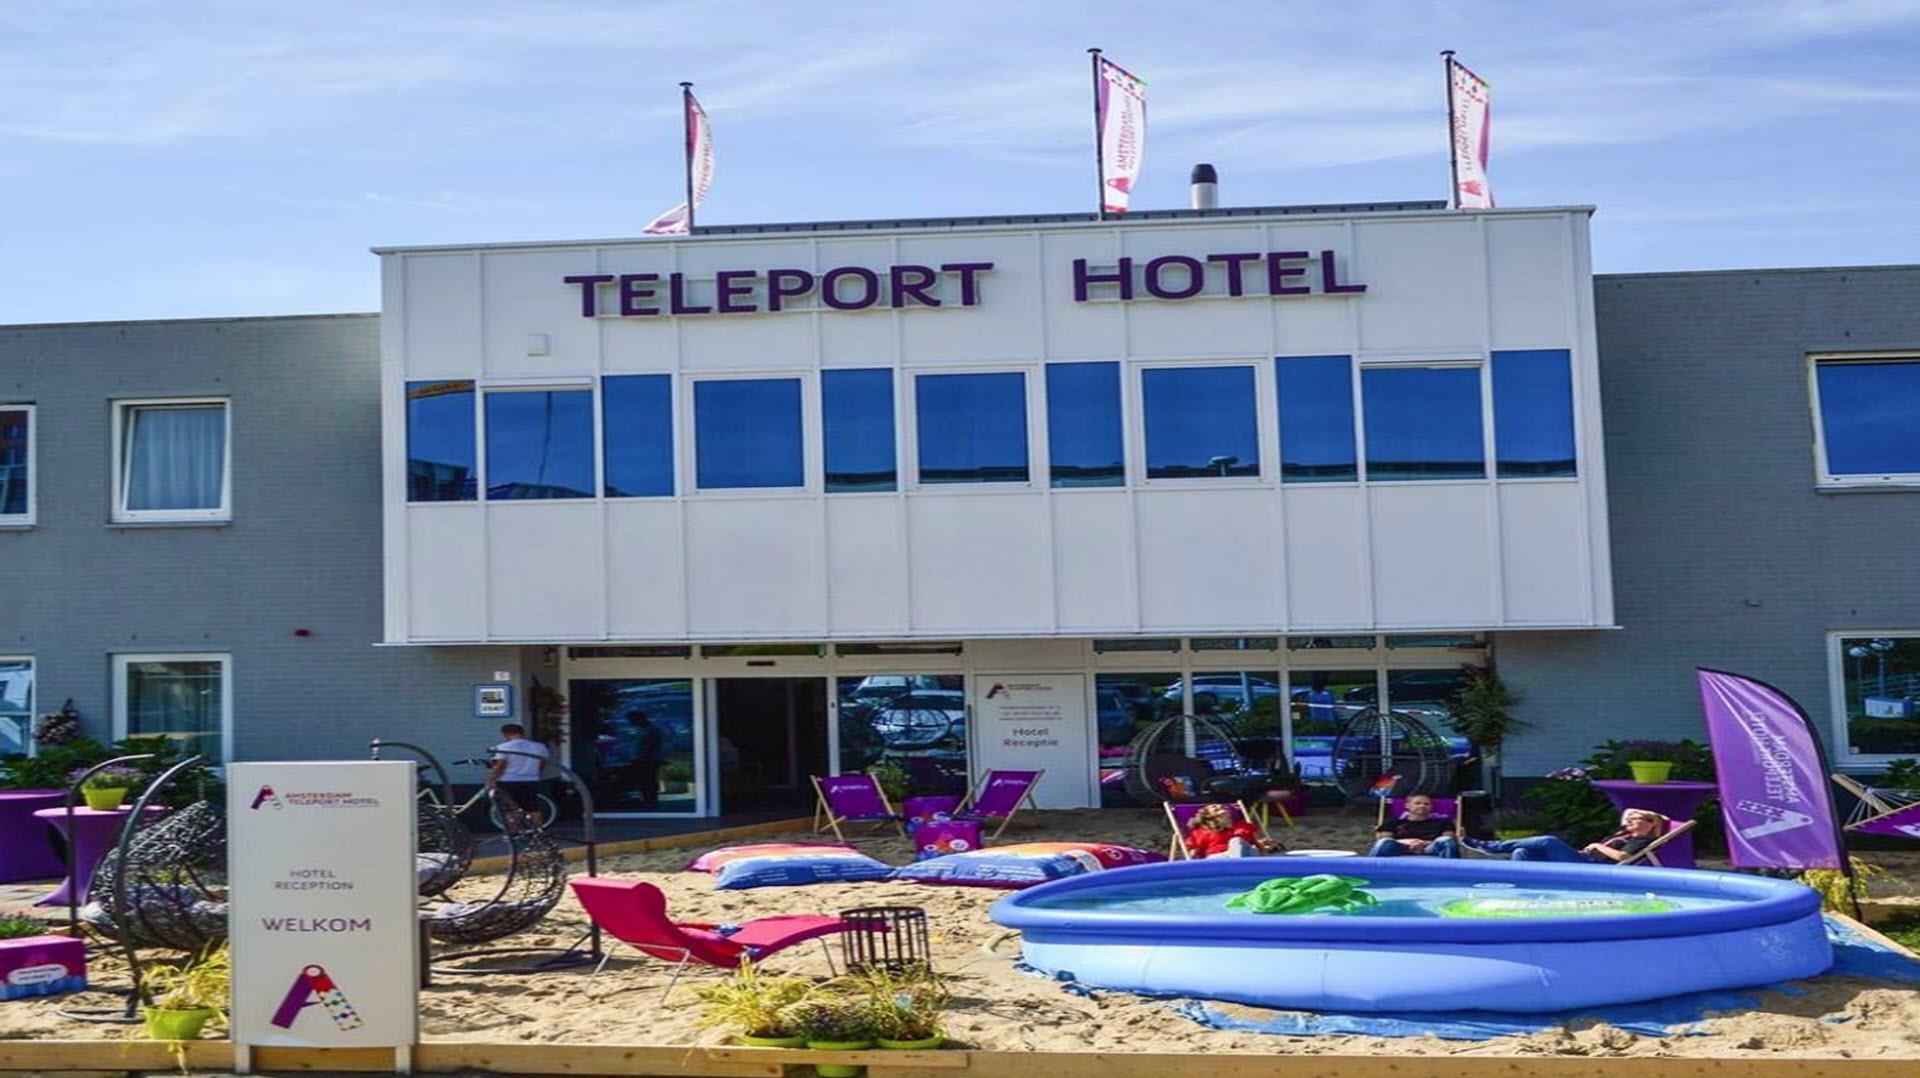 Teleport Hotel Amsterdam in Amsterdam, NL